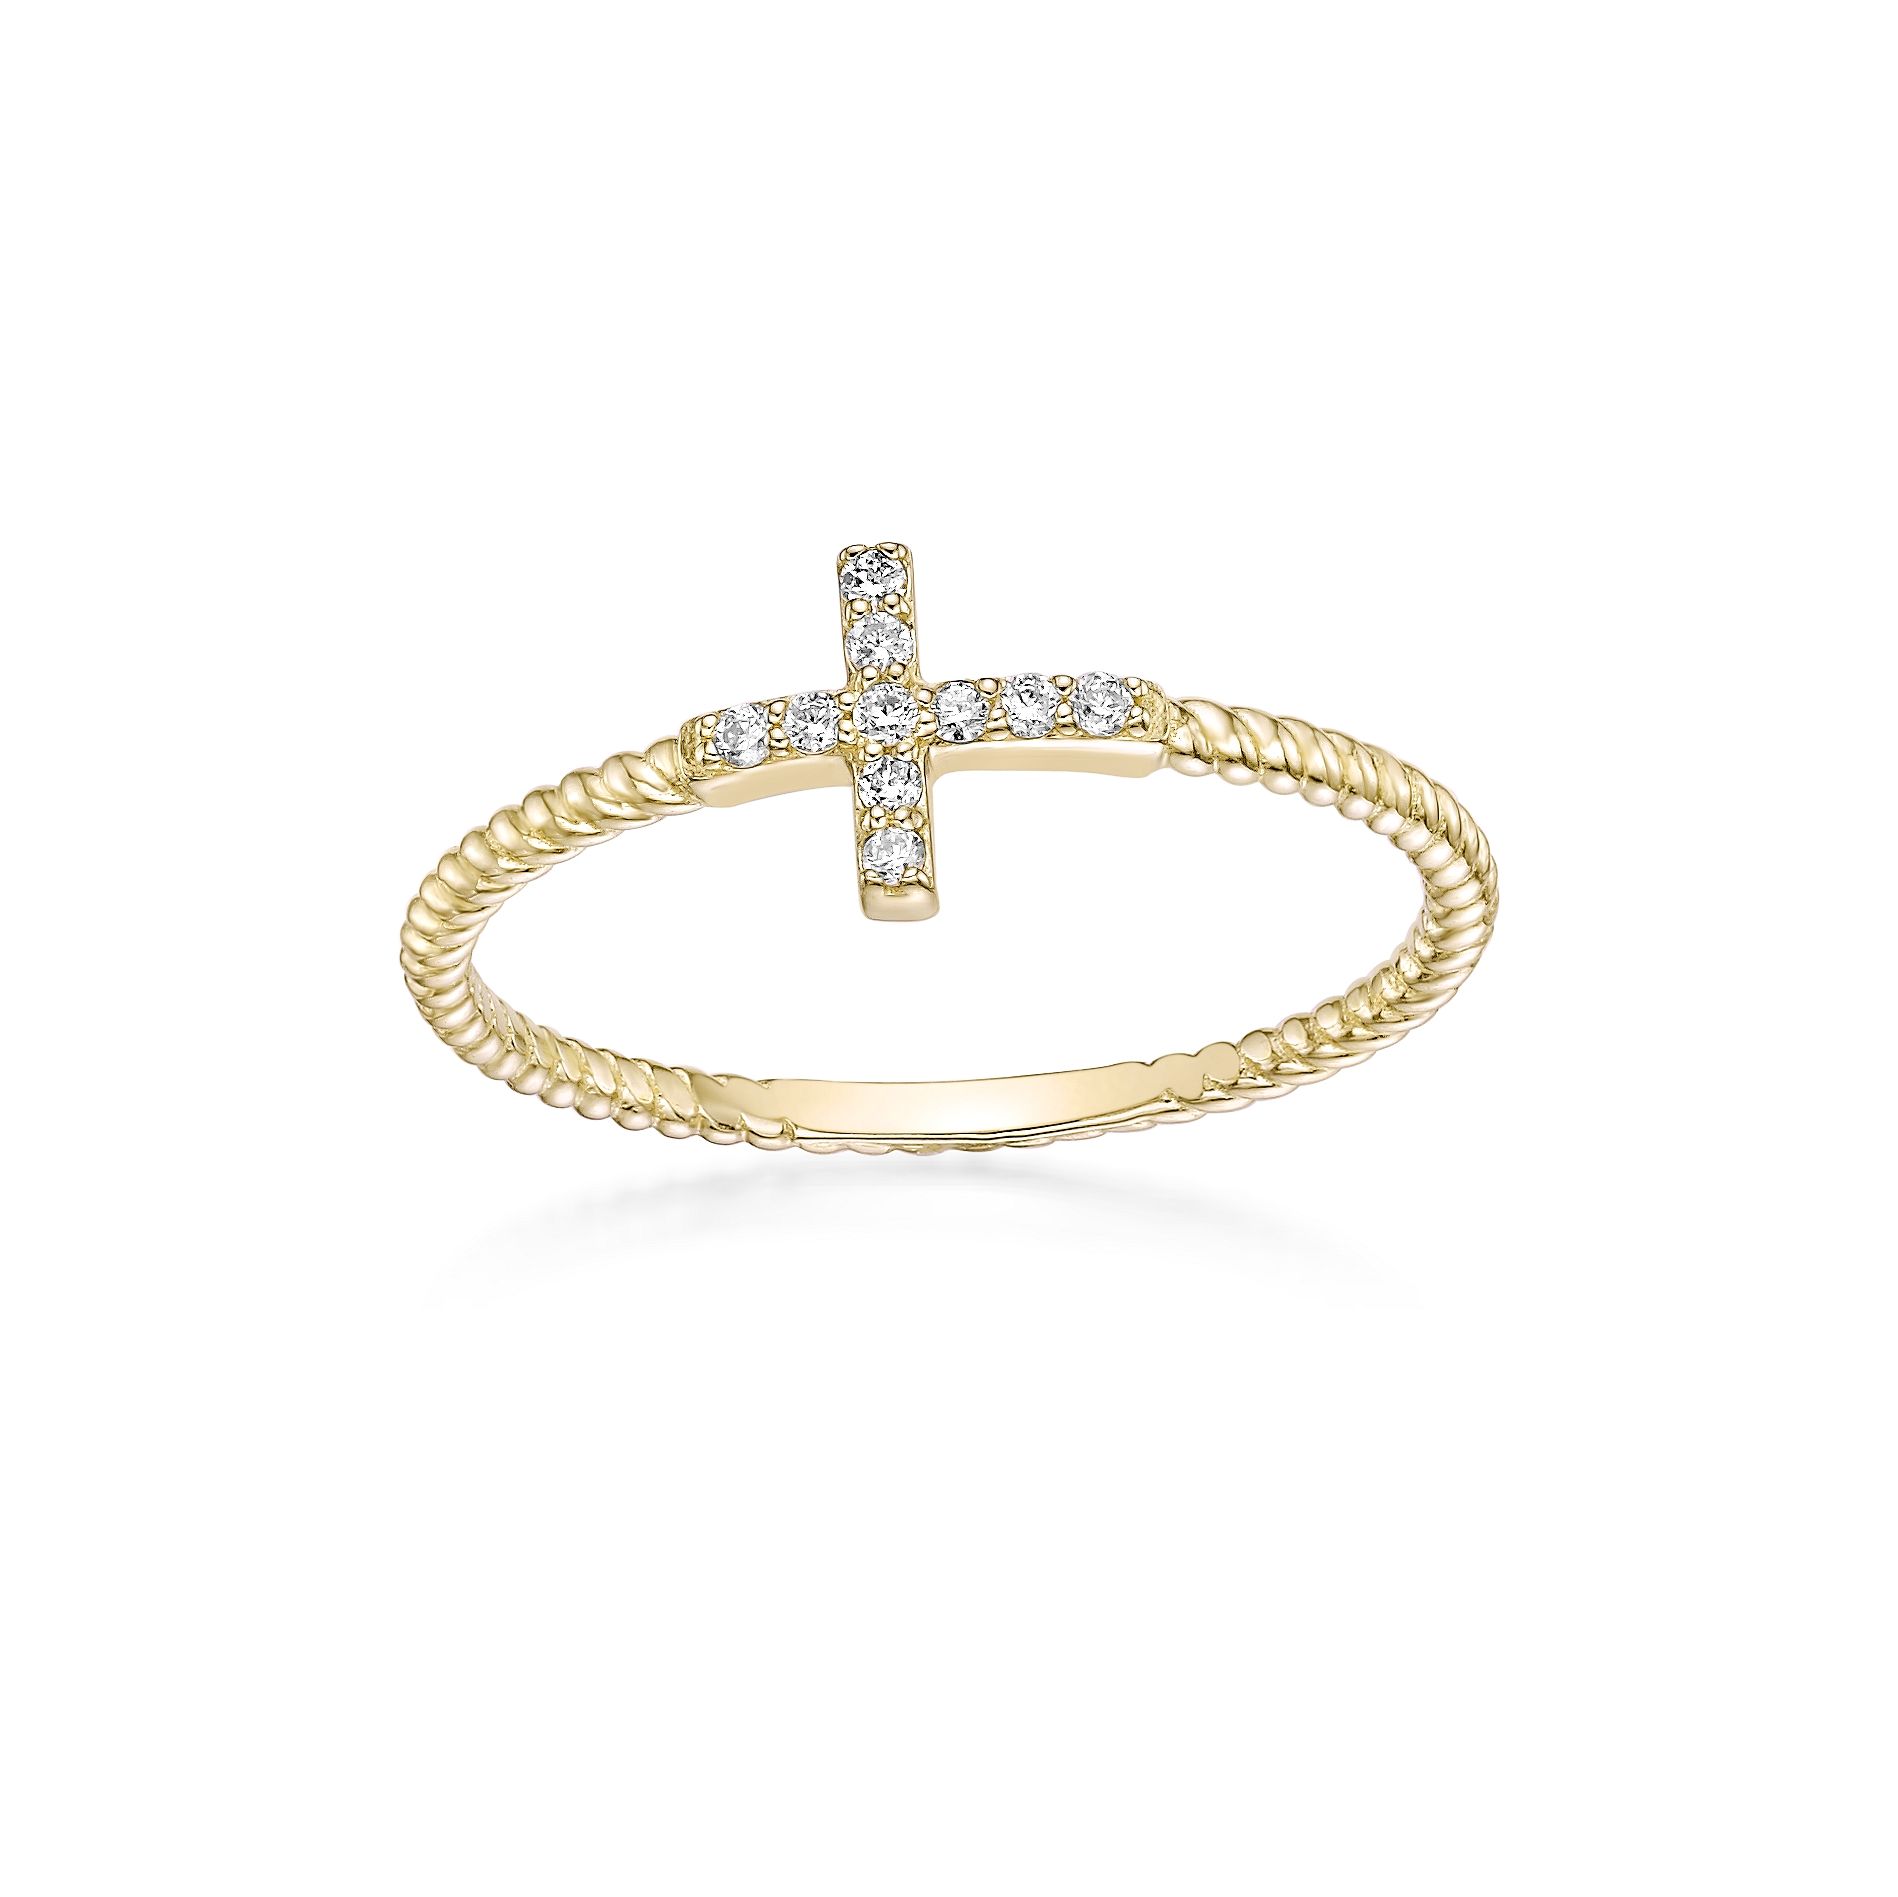 Lavari Jewelers .07 Carat Women's Lab Grown Diamond Cross Ring in 18K Yellow Gold-Plated Sterling Silver, 0.07 Carat | Lavari Jewelers